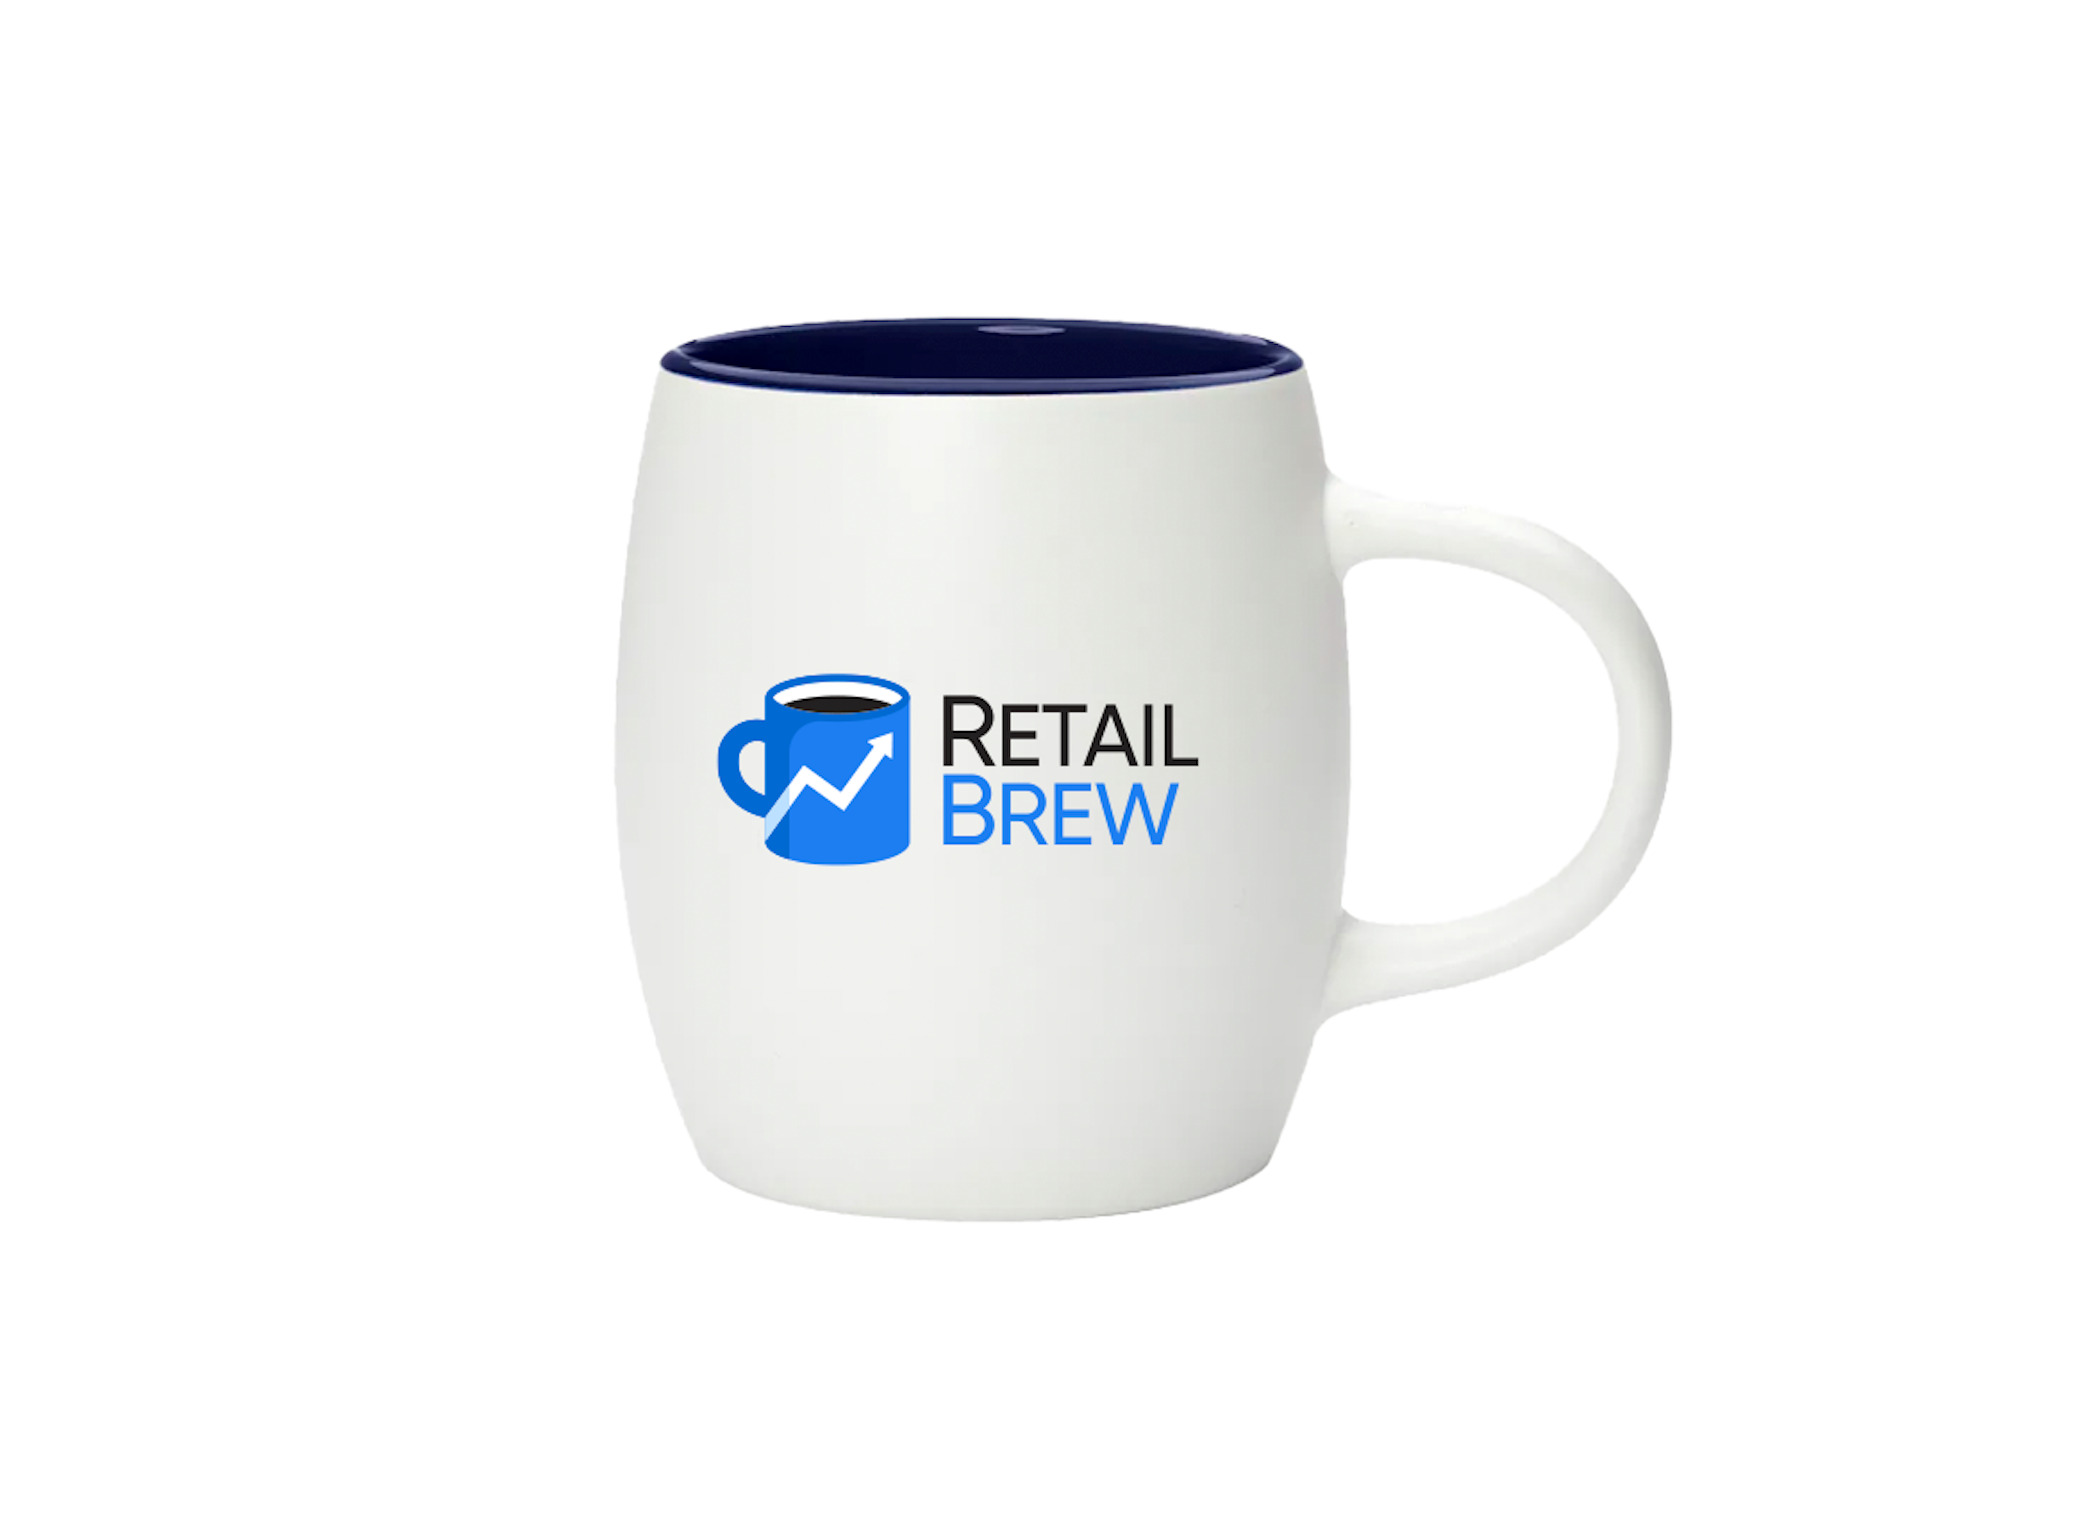 Retail Brew mug